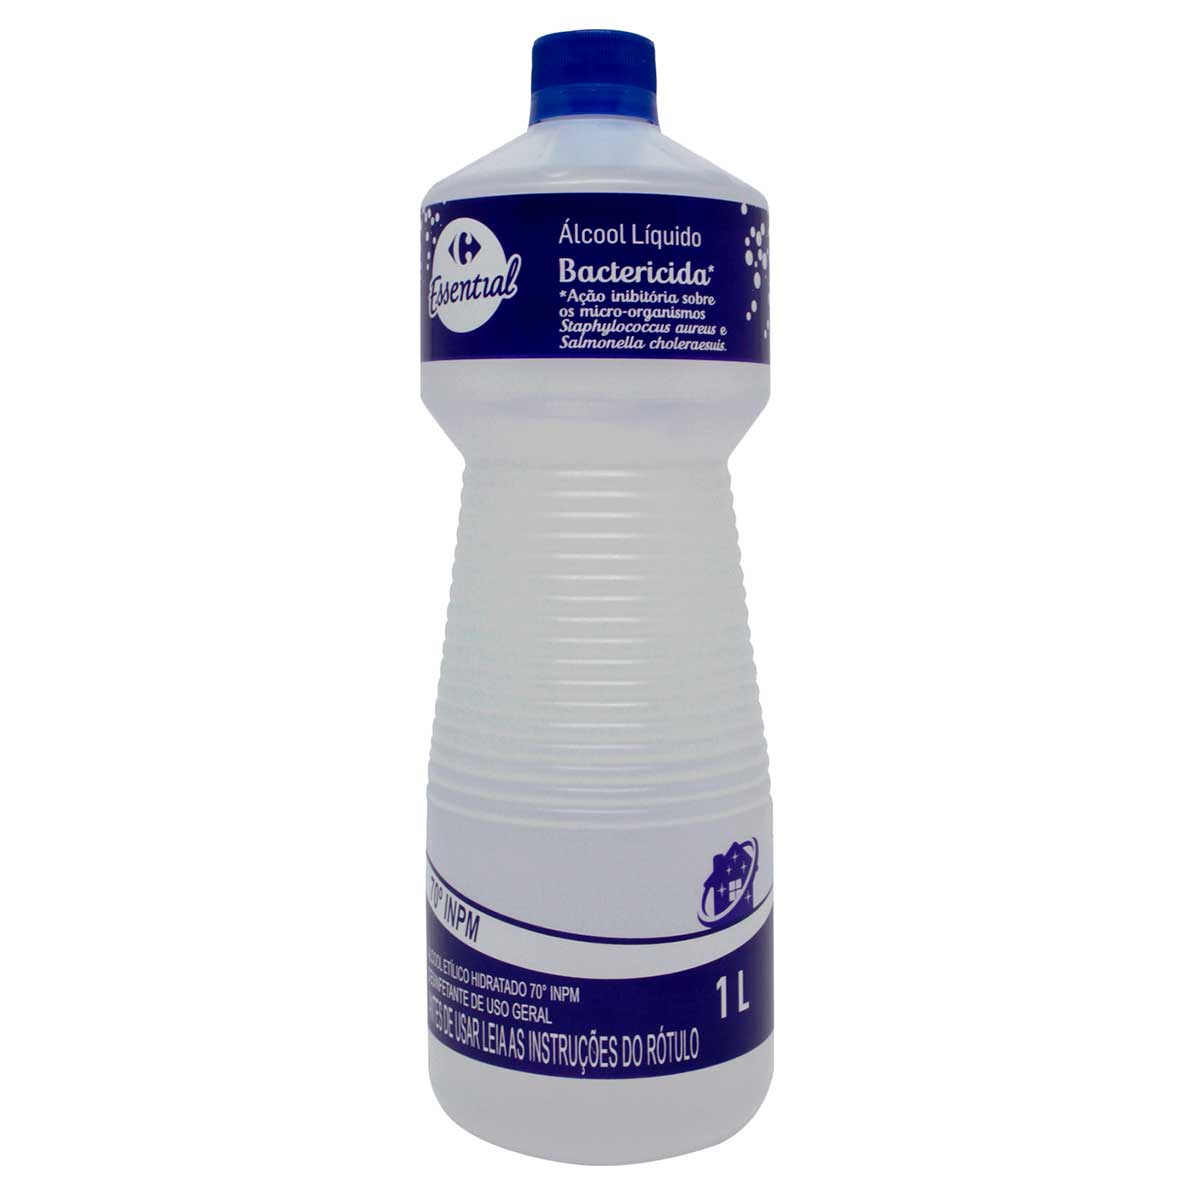 alcool-liquido-bactericida-70%-carrefour-essential-1-litro-1.jpg